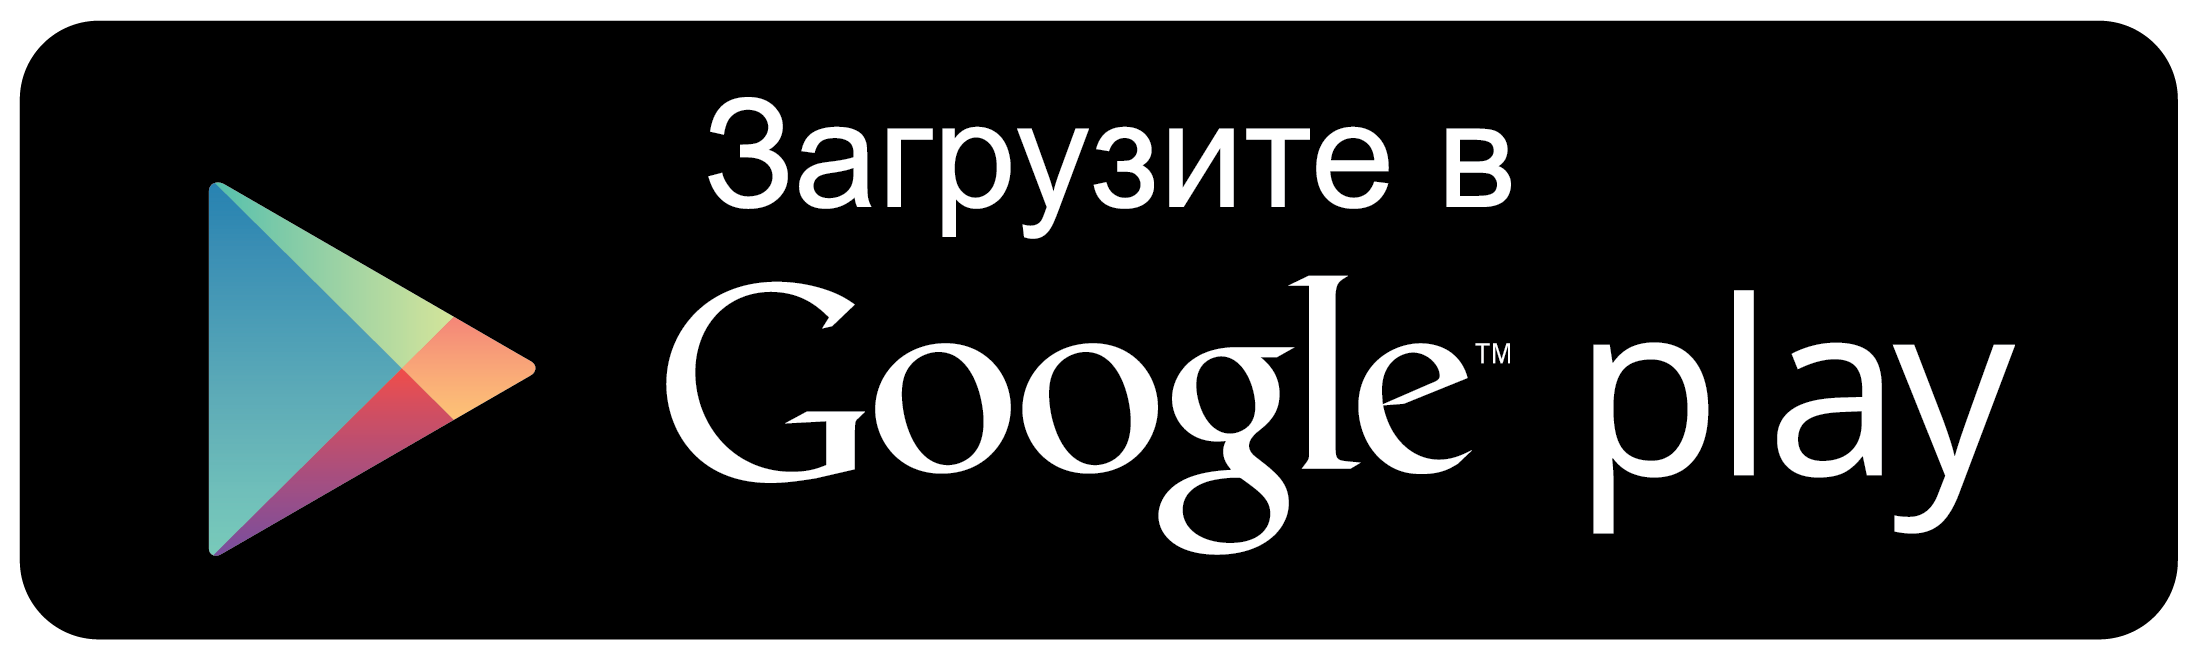 Google Play логотип